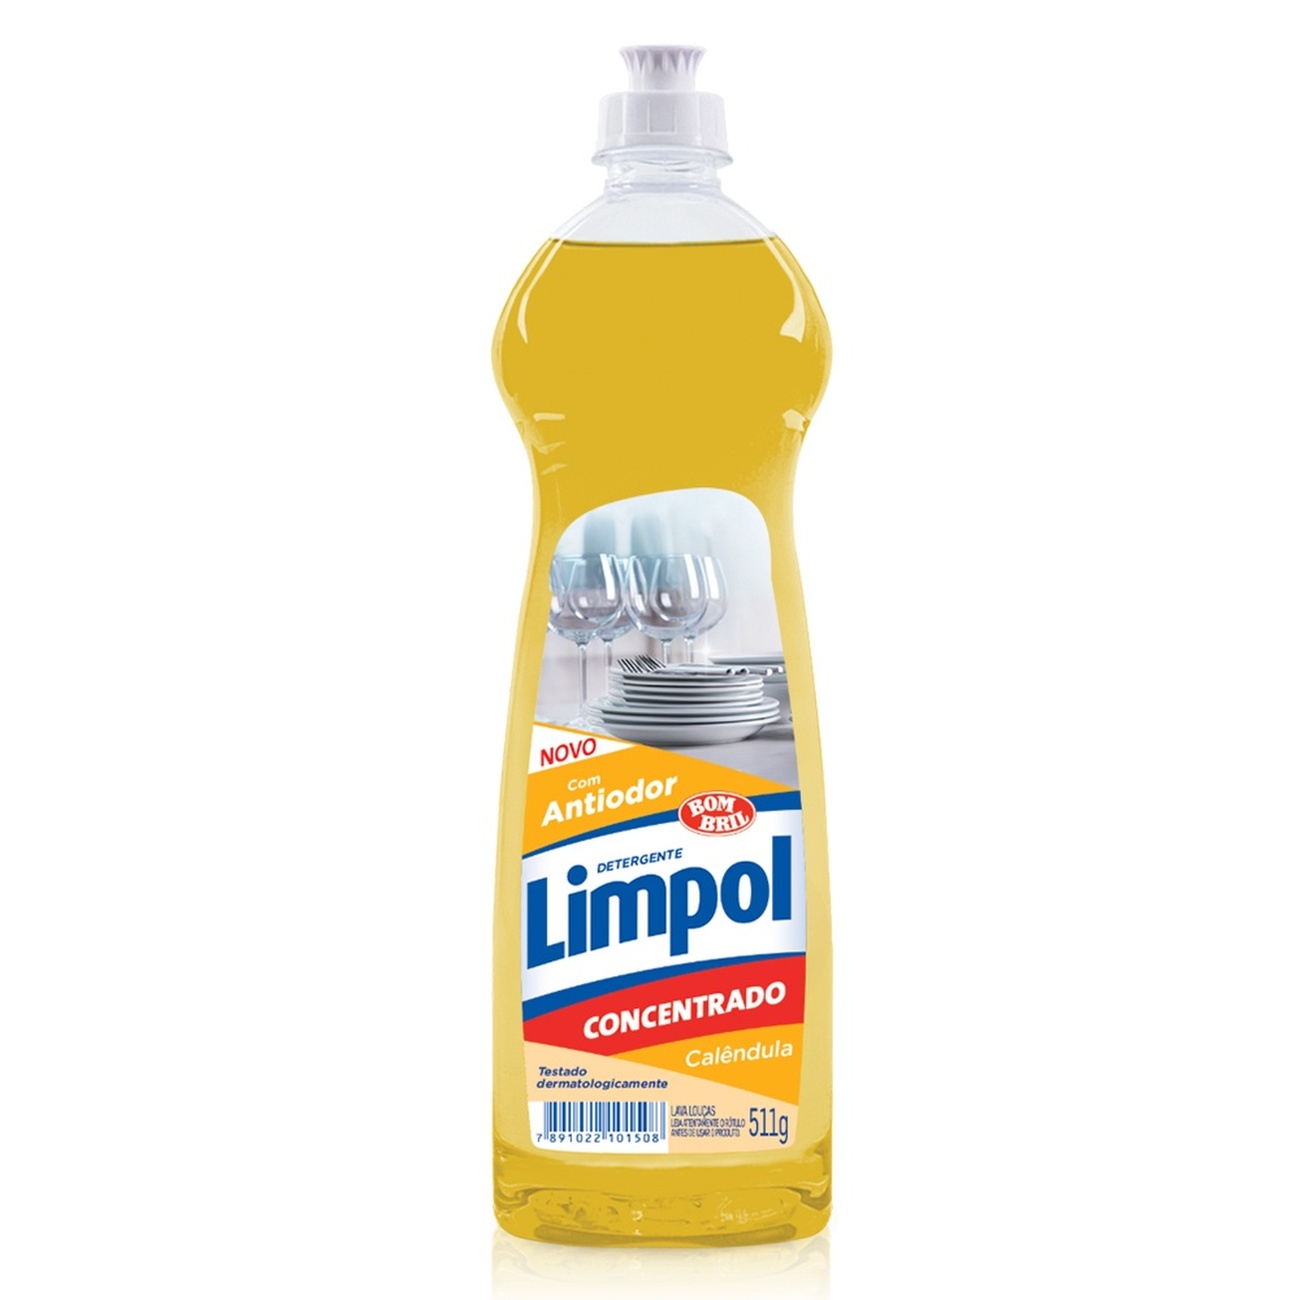 Detergente Limpol Gel Calndula 511g